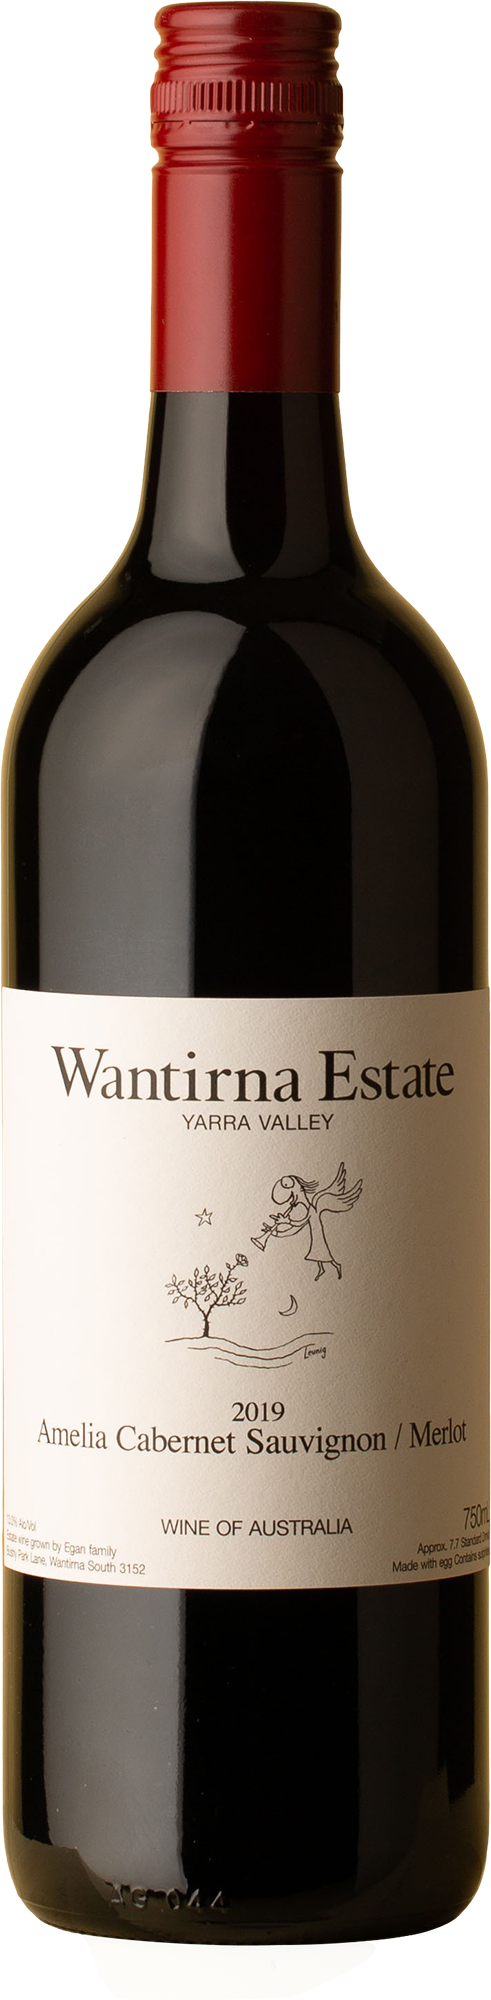 Wantirna Estate - Amelia Cabernet Merlot 2019 Red Wine